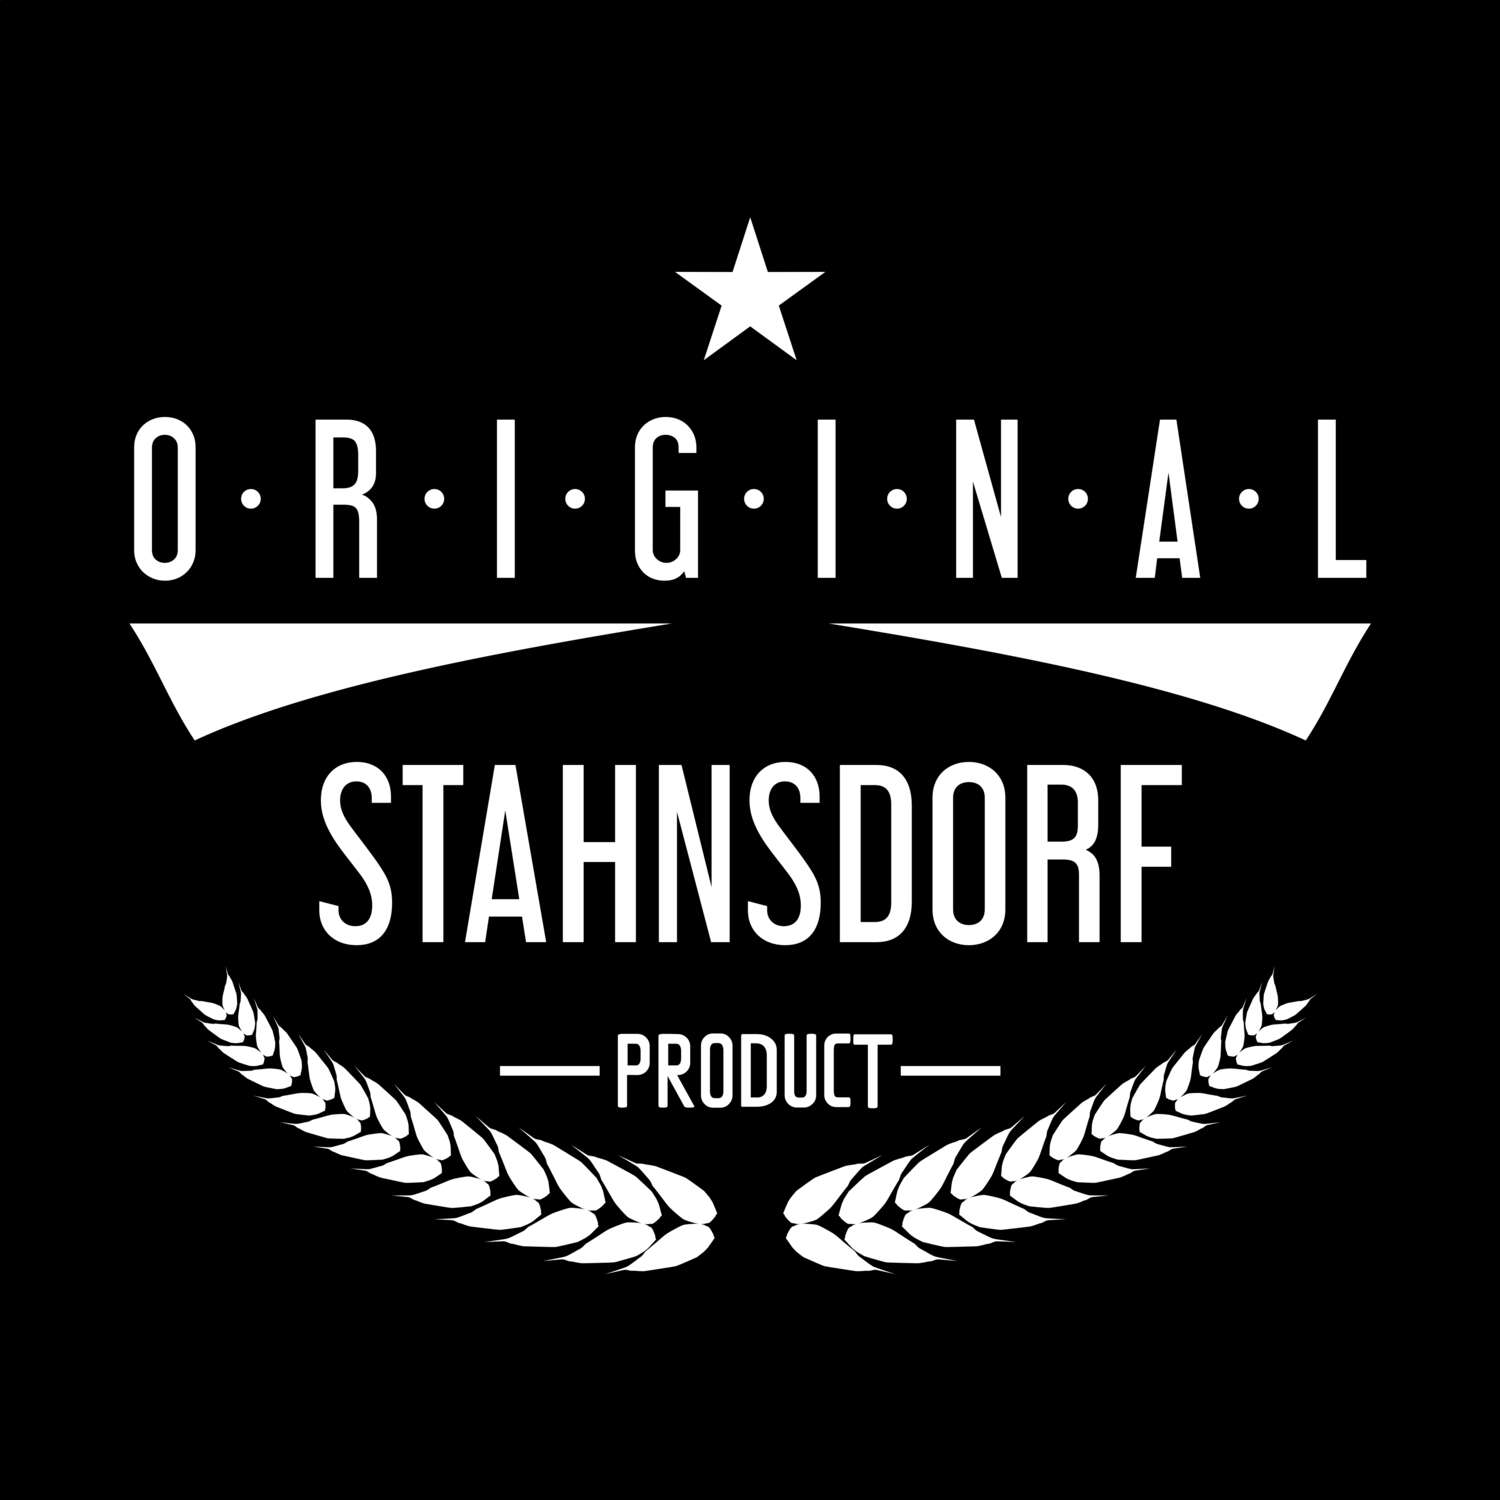 Stahnsdorf T-Shirt »Original Product«